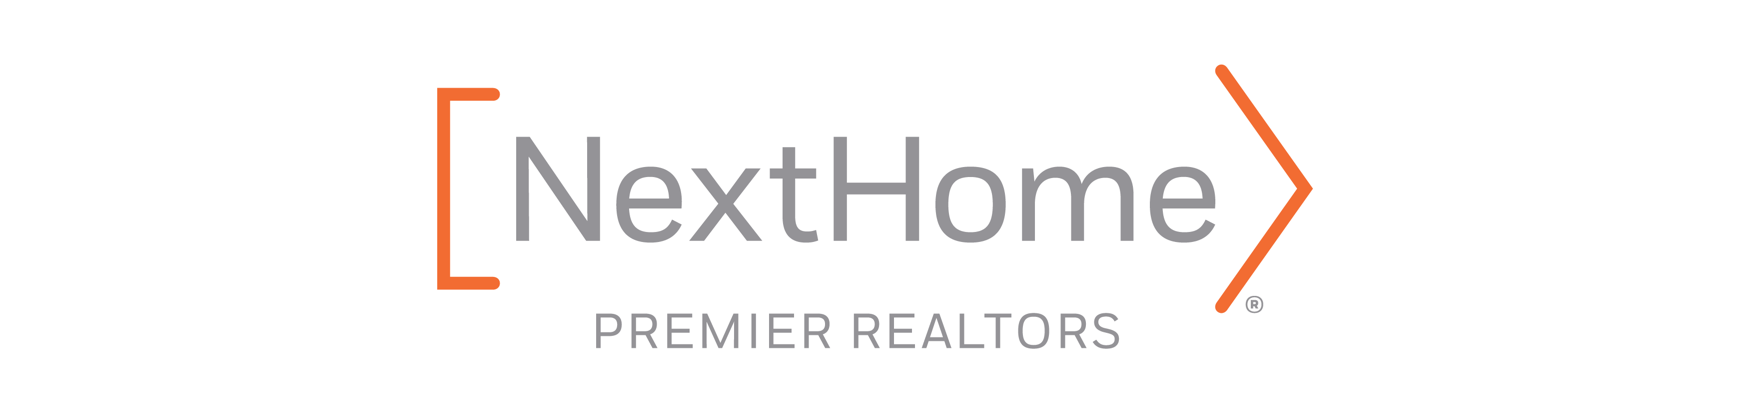 NextHome Premier Realtors